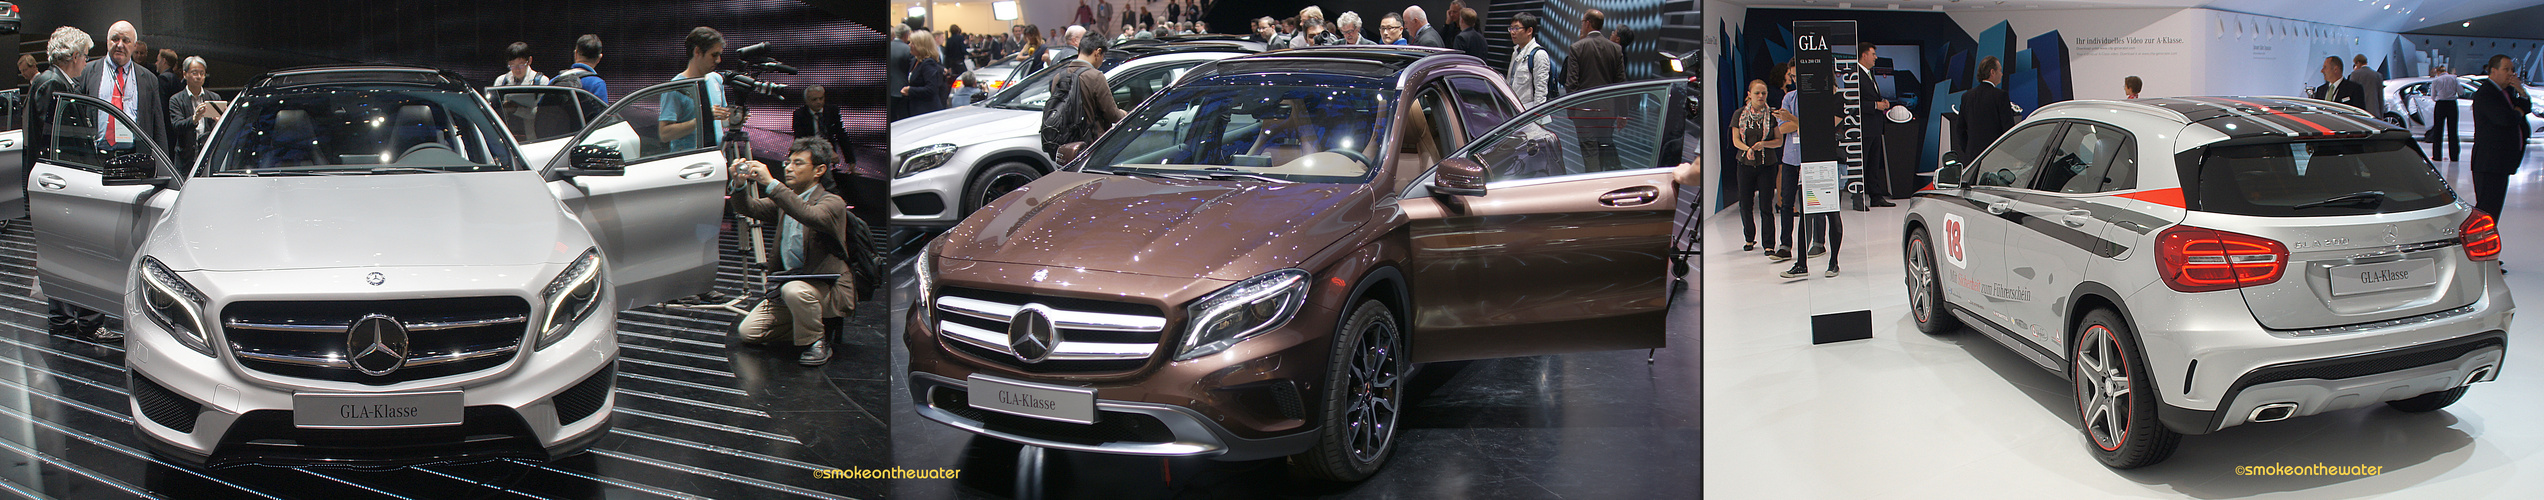 Weltpremiere: Mercedes GLA-Klasse